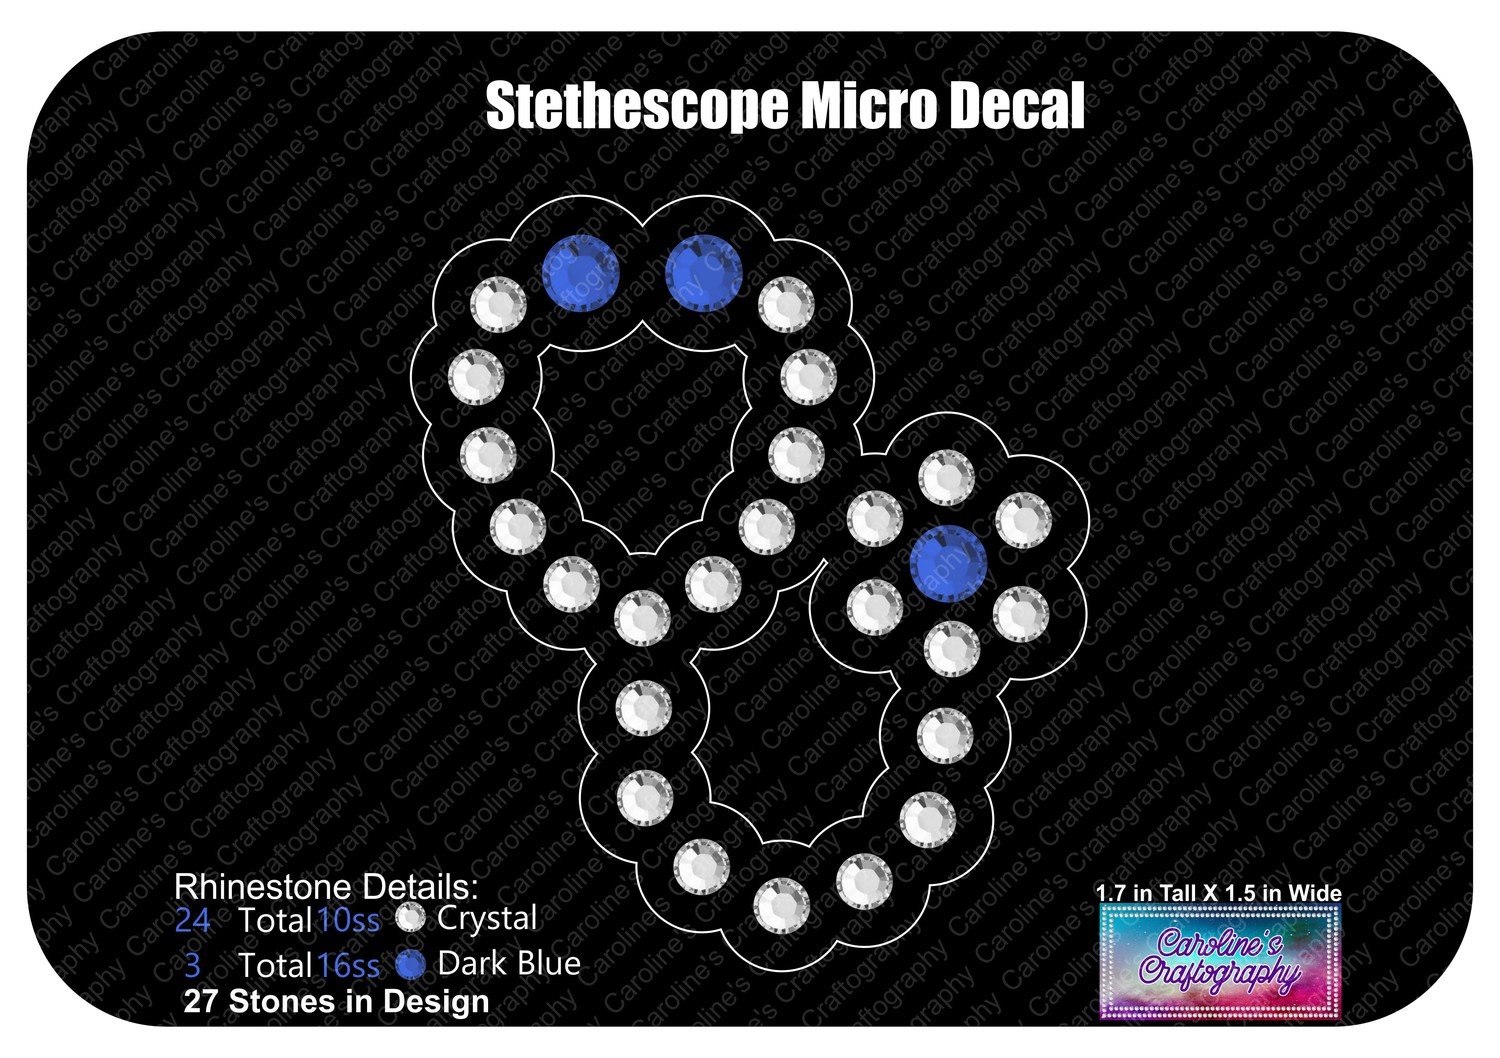 Stethoscope Micro Decal Rhinestone